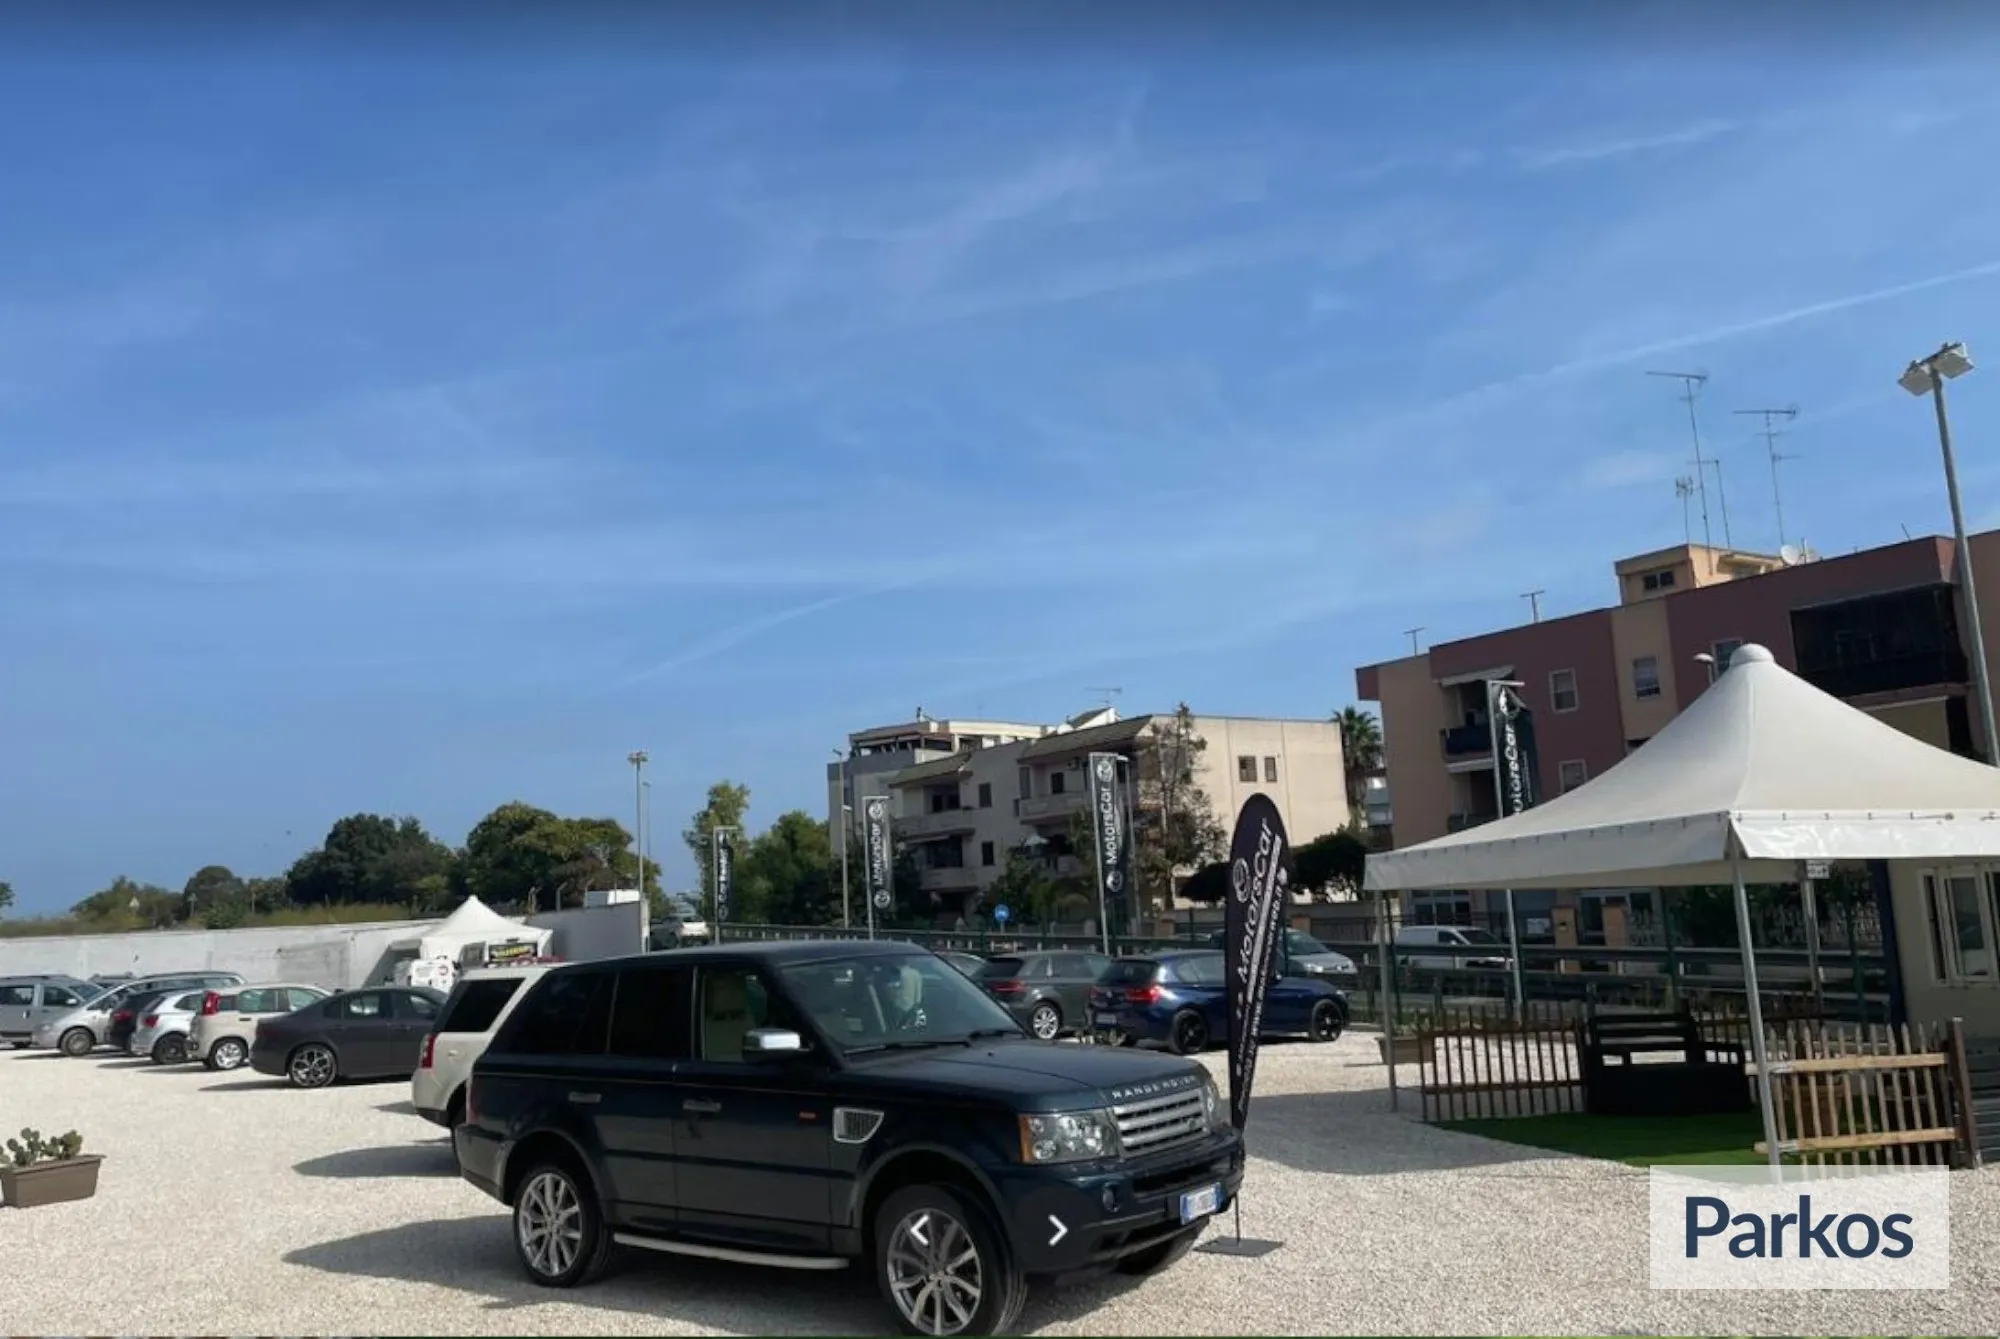 Motorscar Rental (Paga in parcheggio) - Parking Brindisi Airport - picture 1